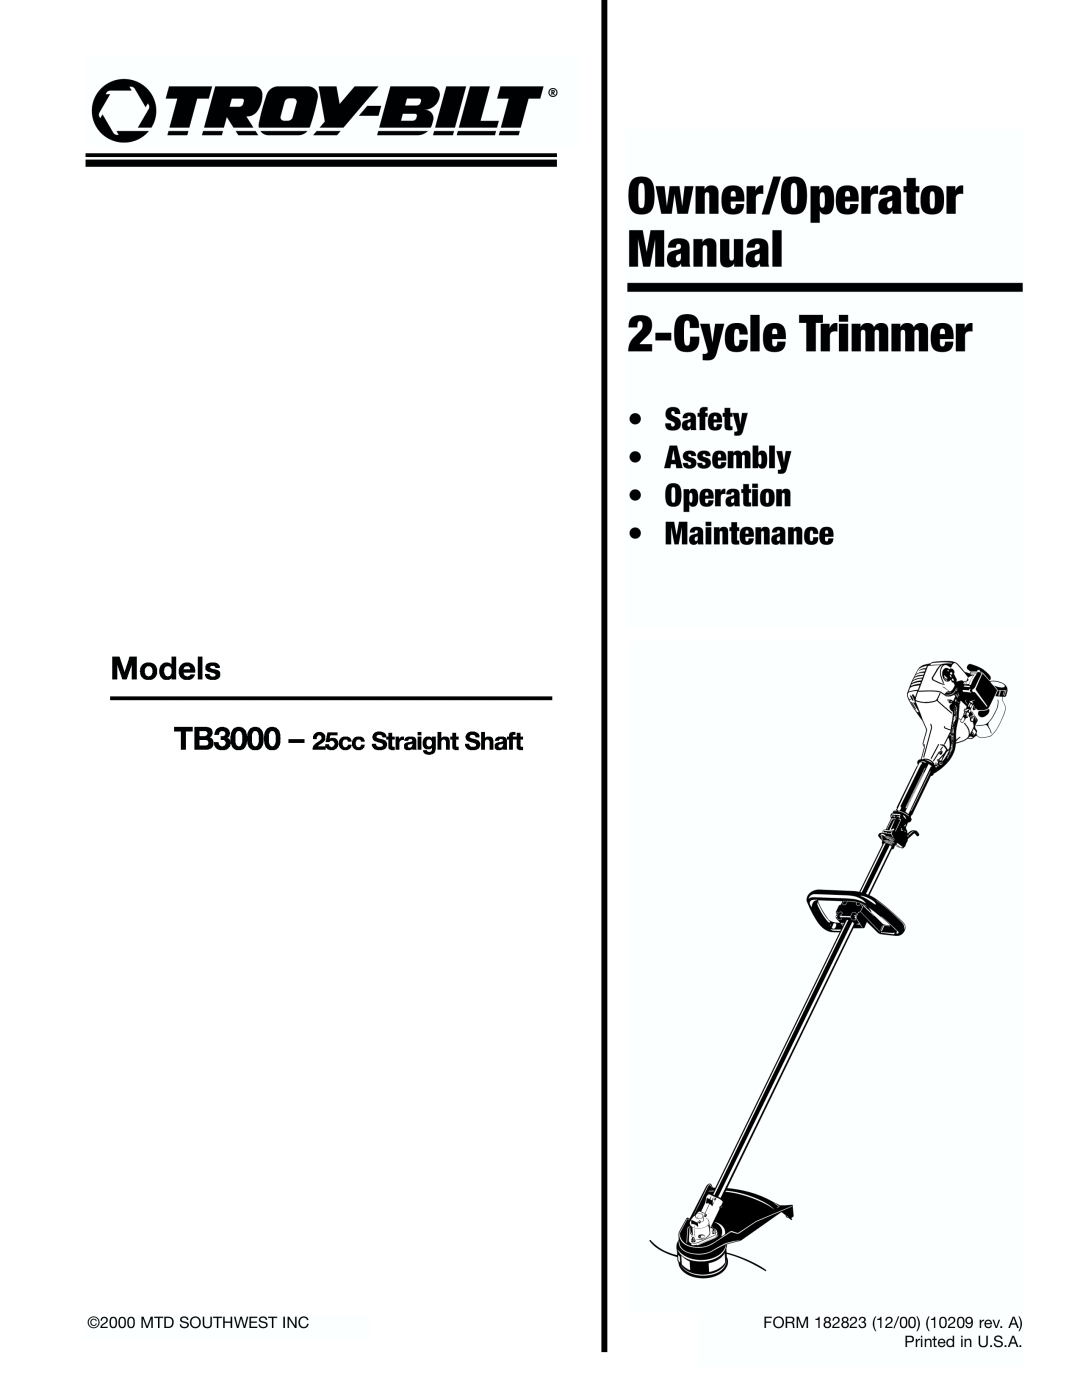 Troy-Bilt manual Safety Assembly Operation Maintenance Models, TB3000 - 25cc Straight Shaft 